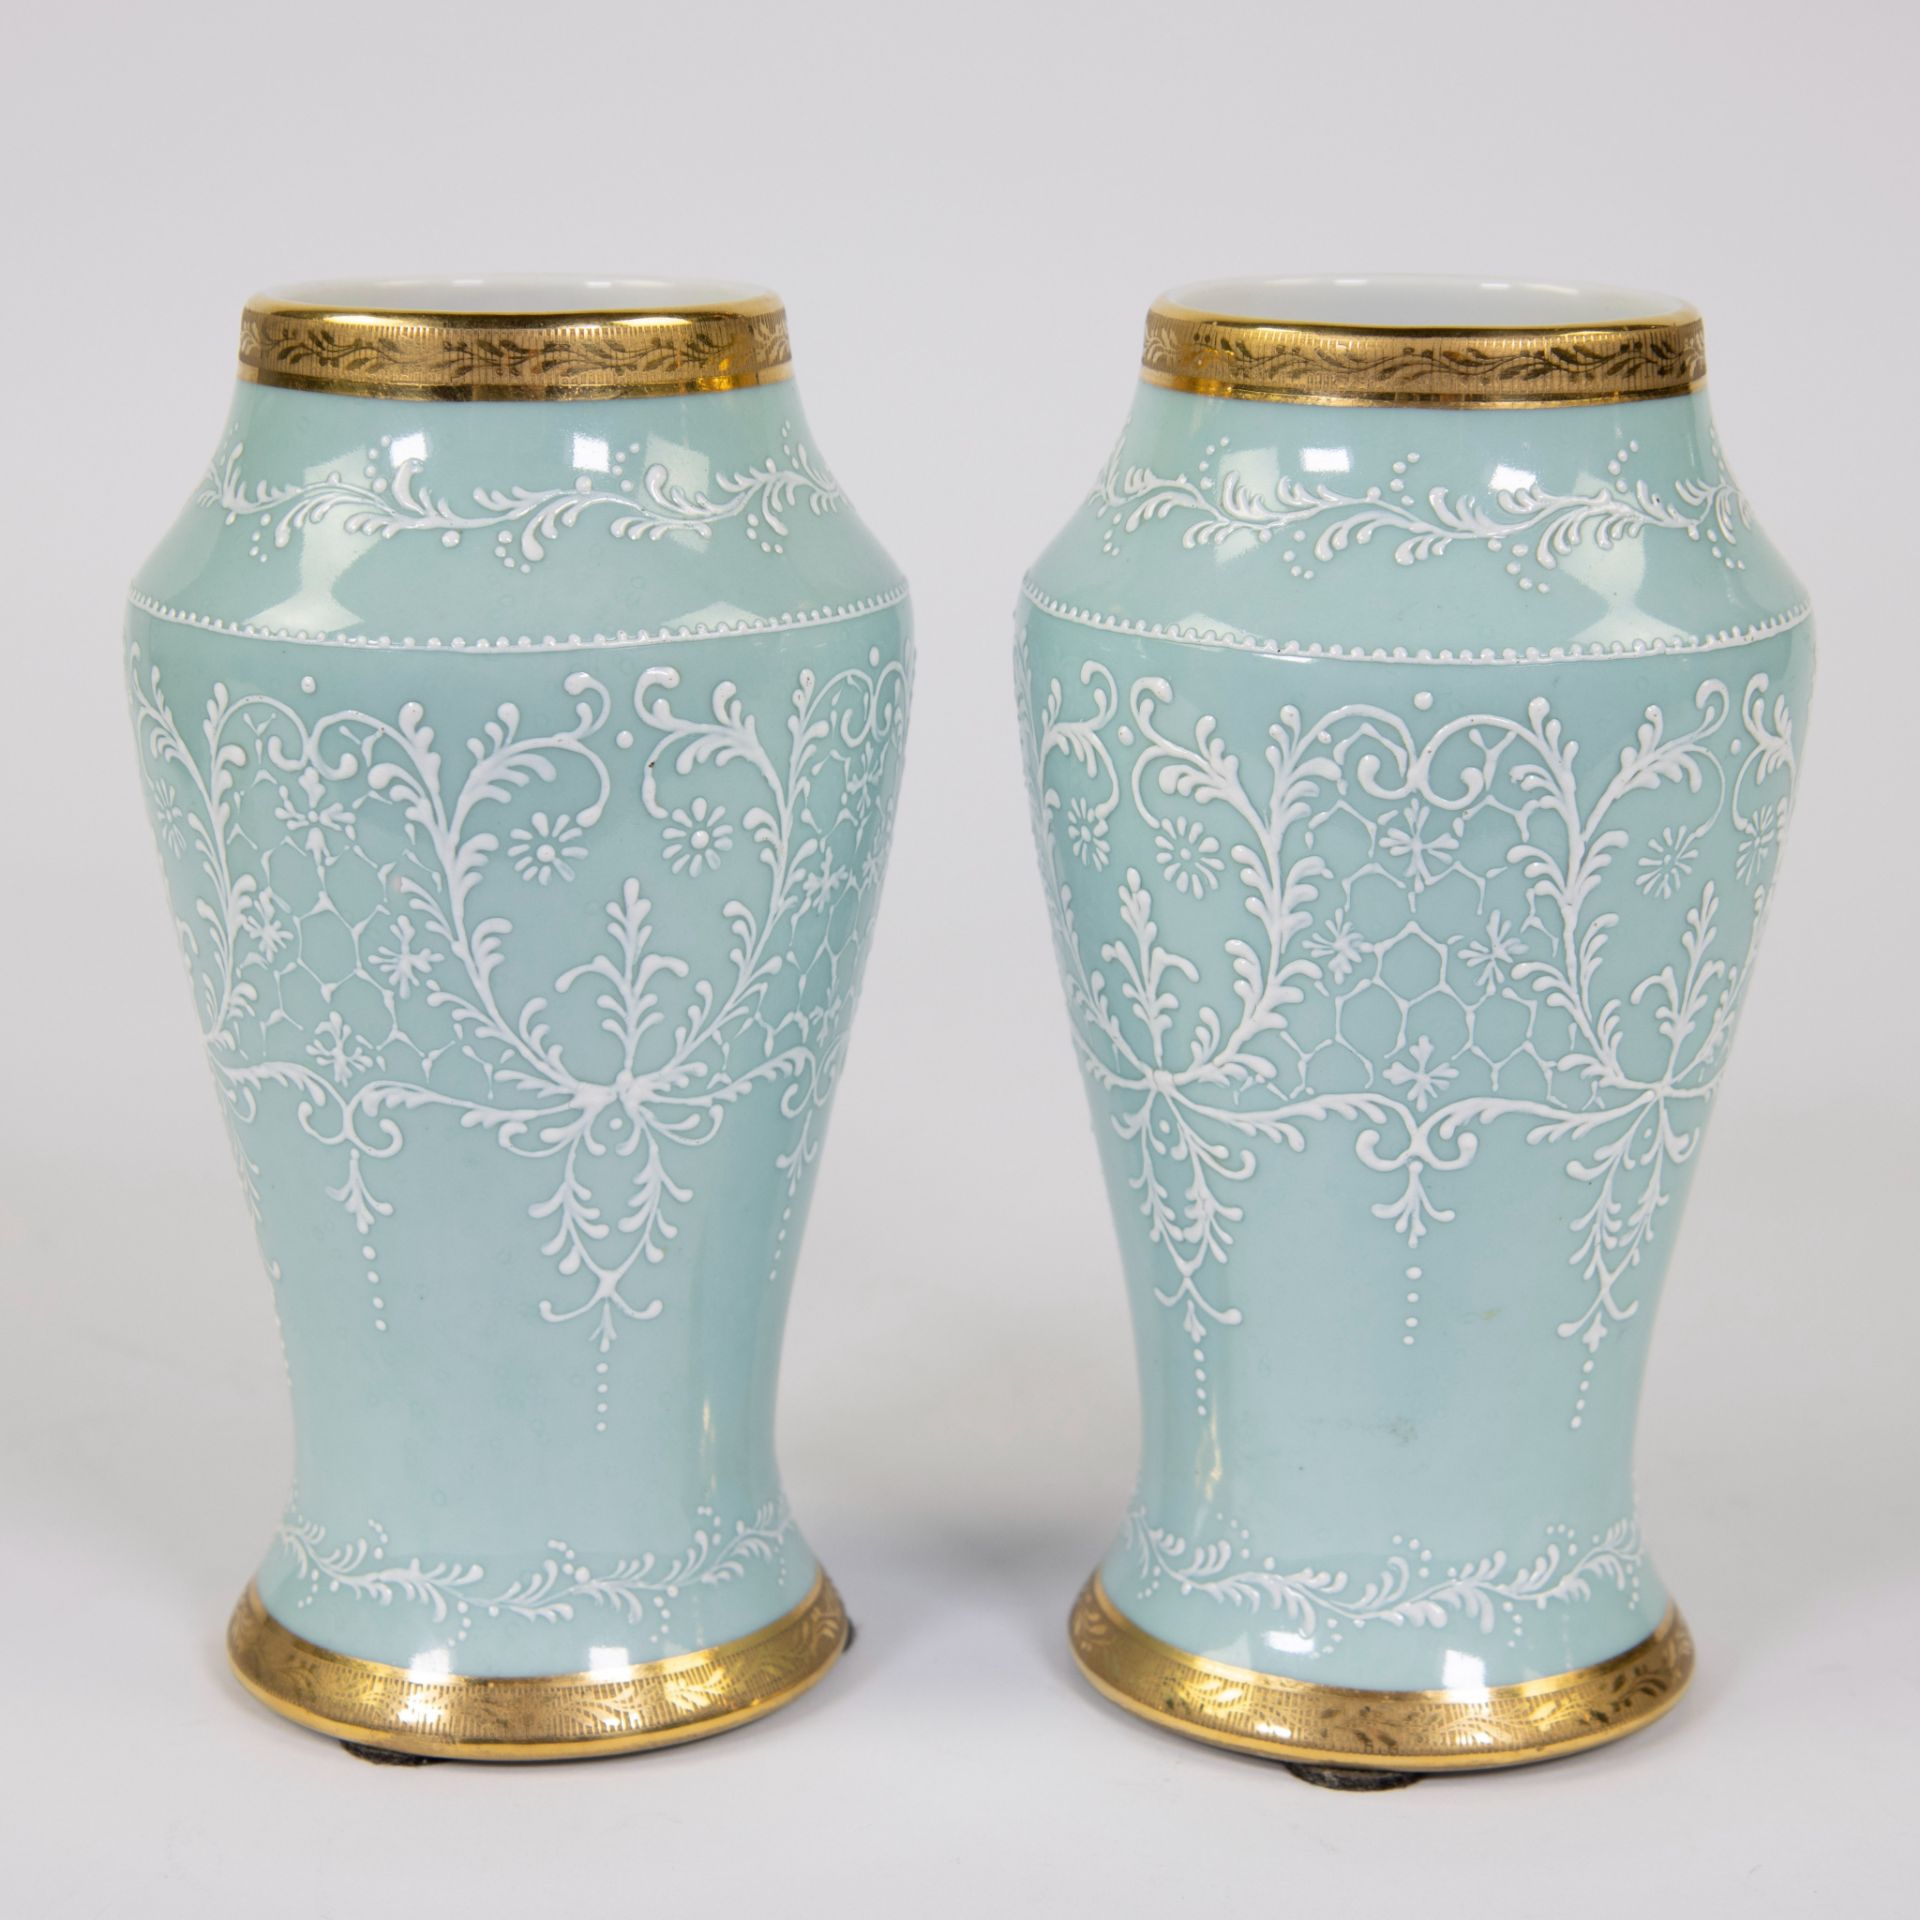 Pair of fine porcelain vases Arlette from Le Tallec, France - Image 3 of 5